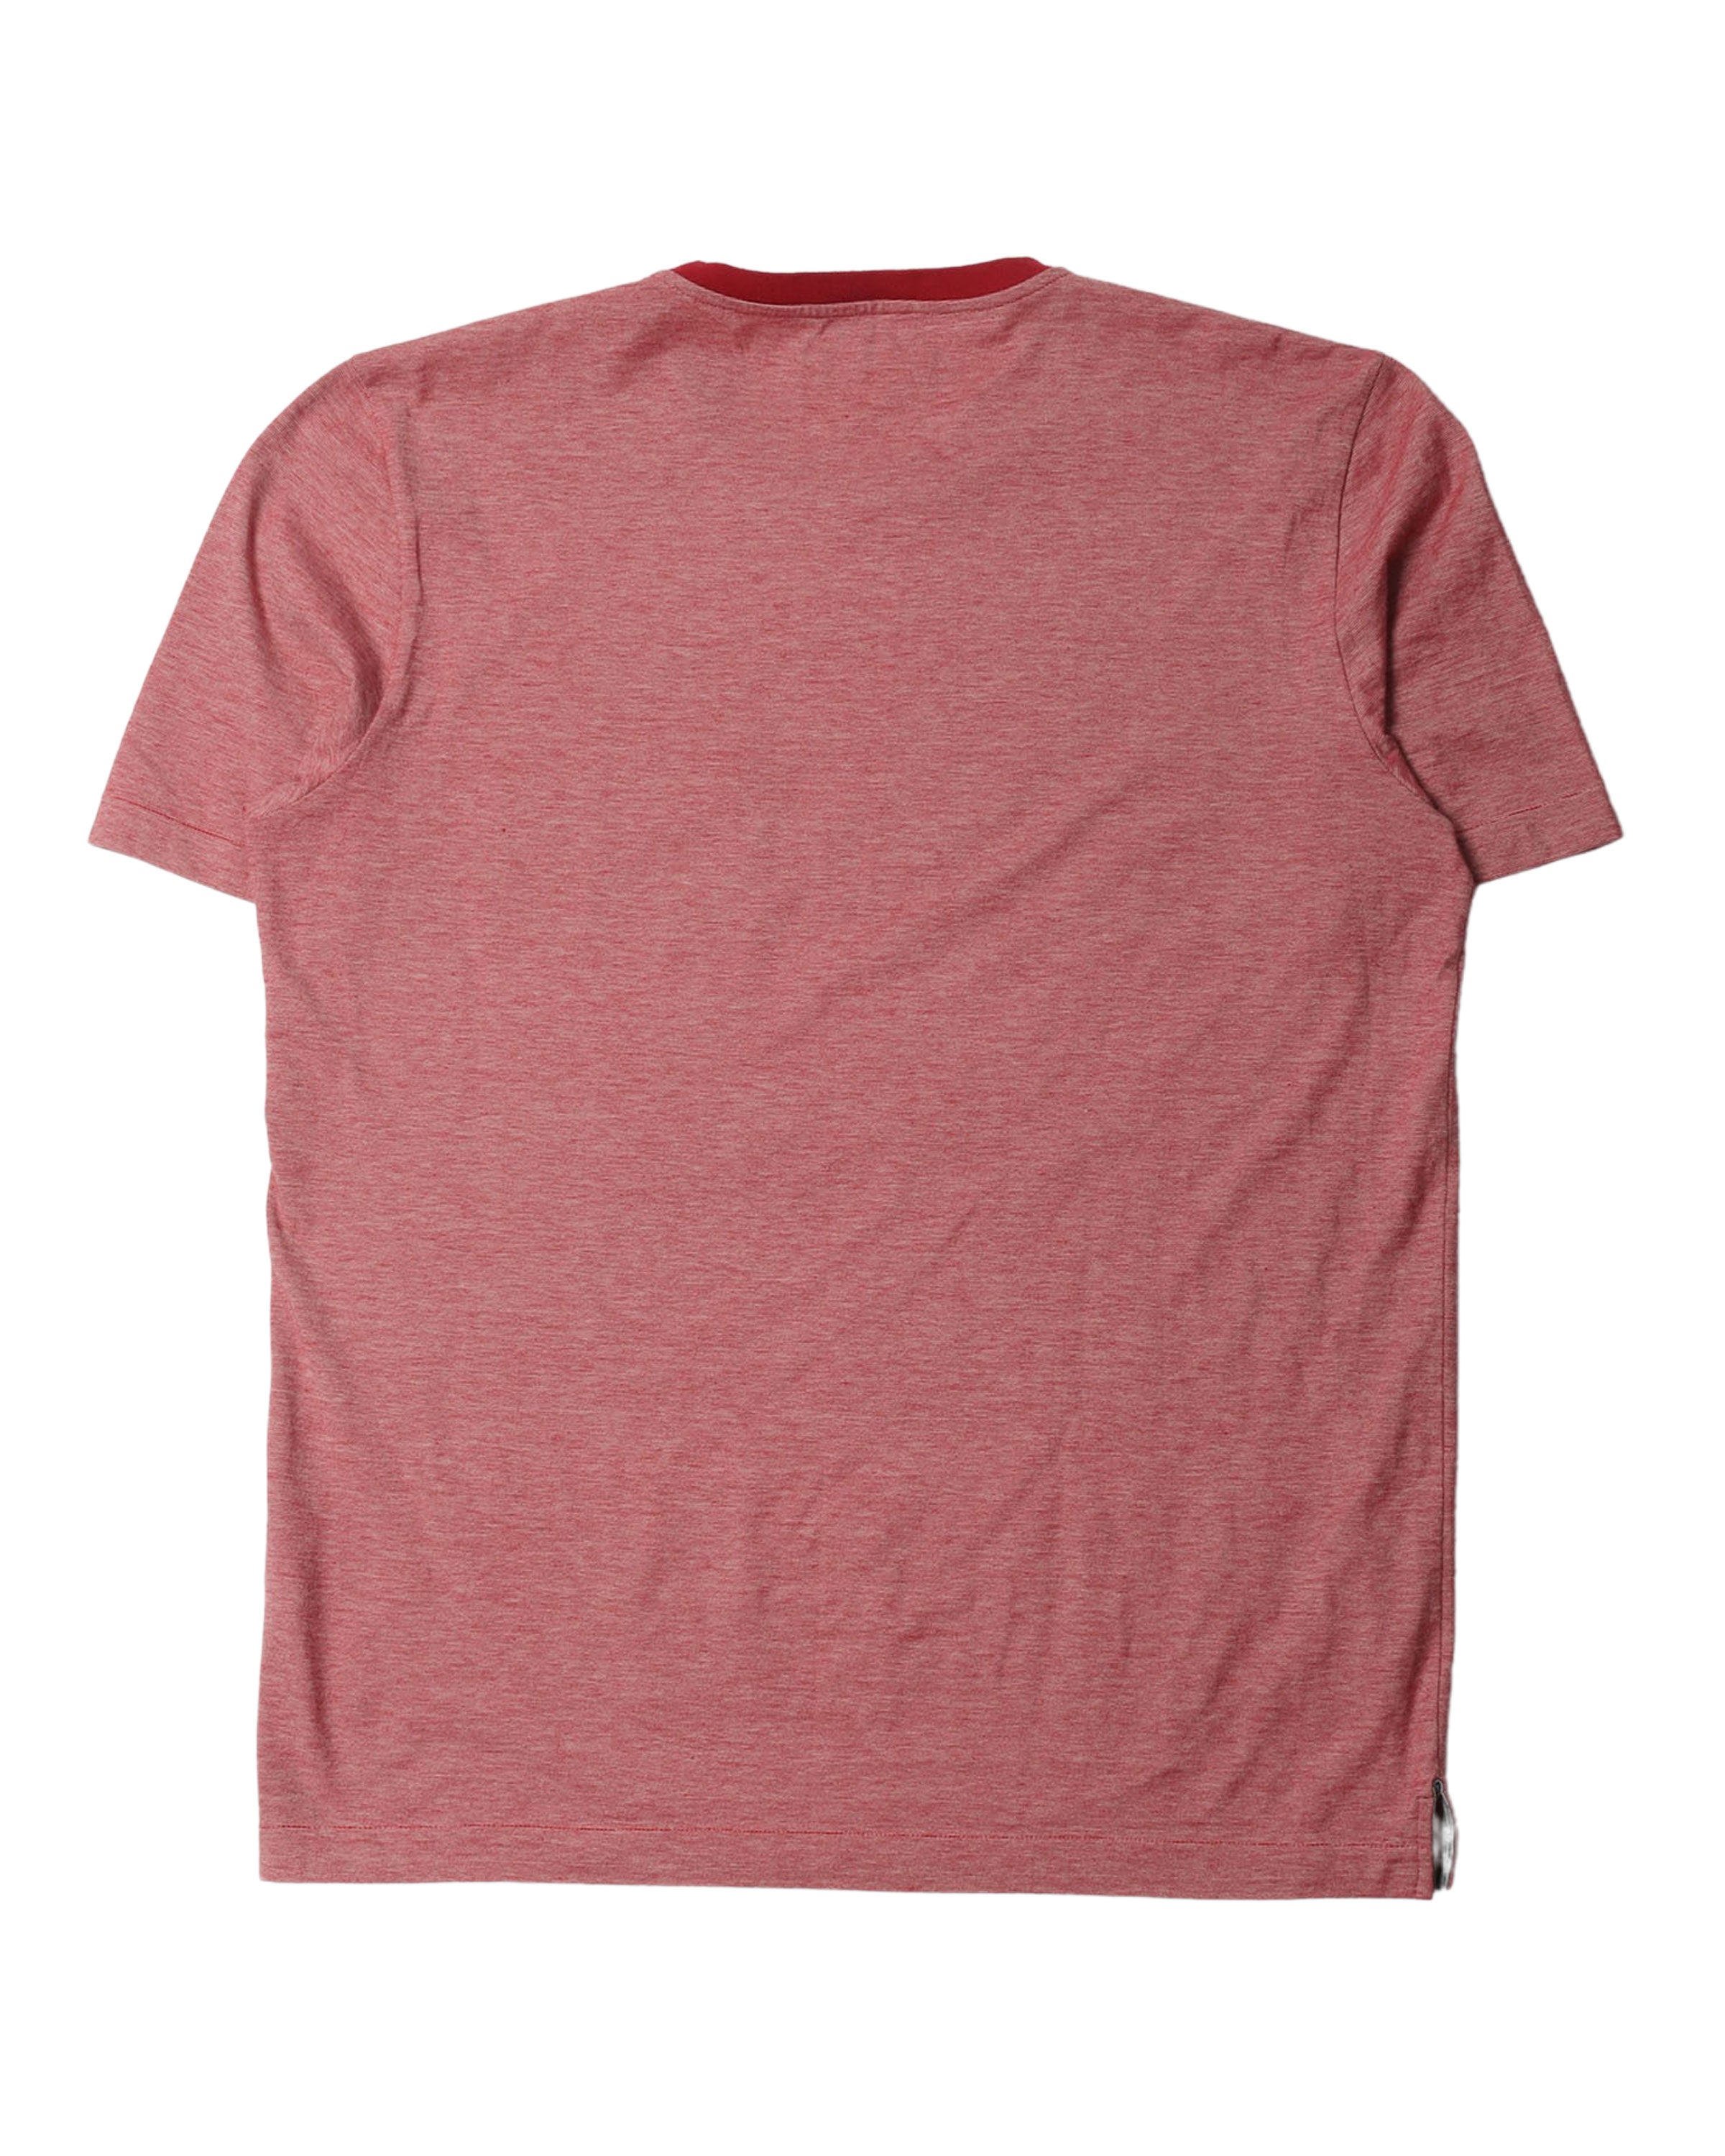 Cashmere Blend Pocket T-Shirt